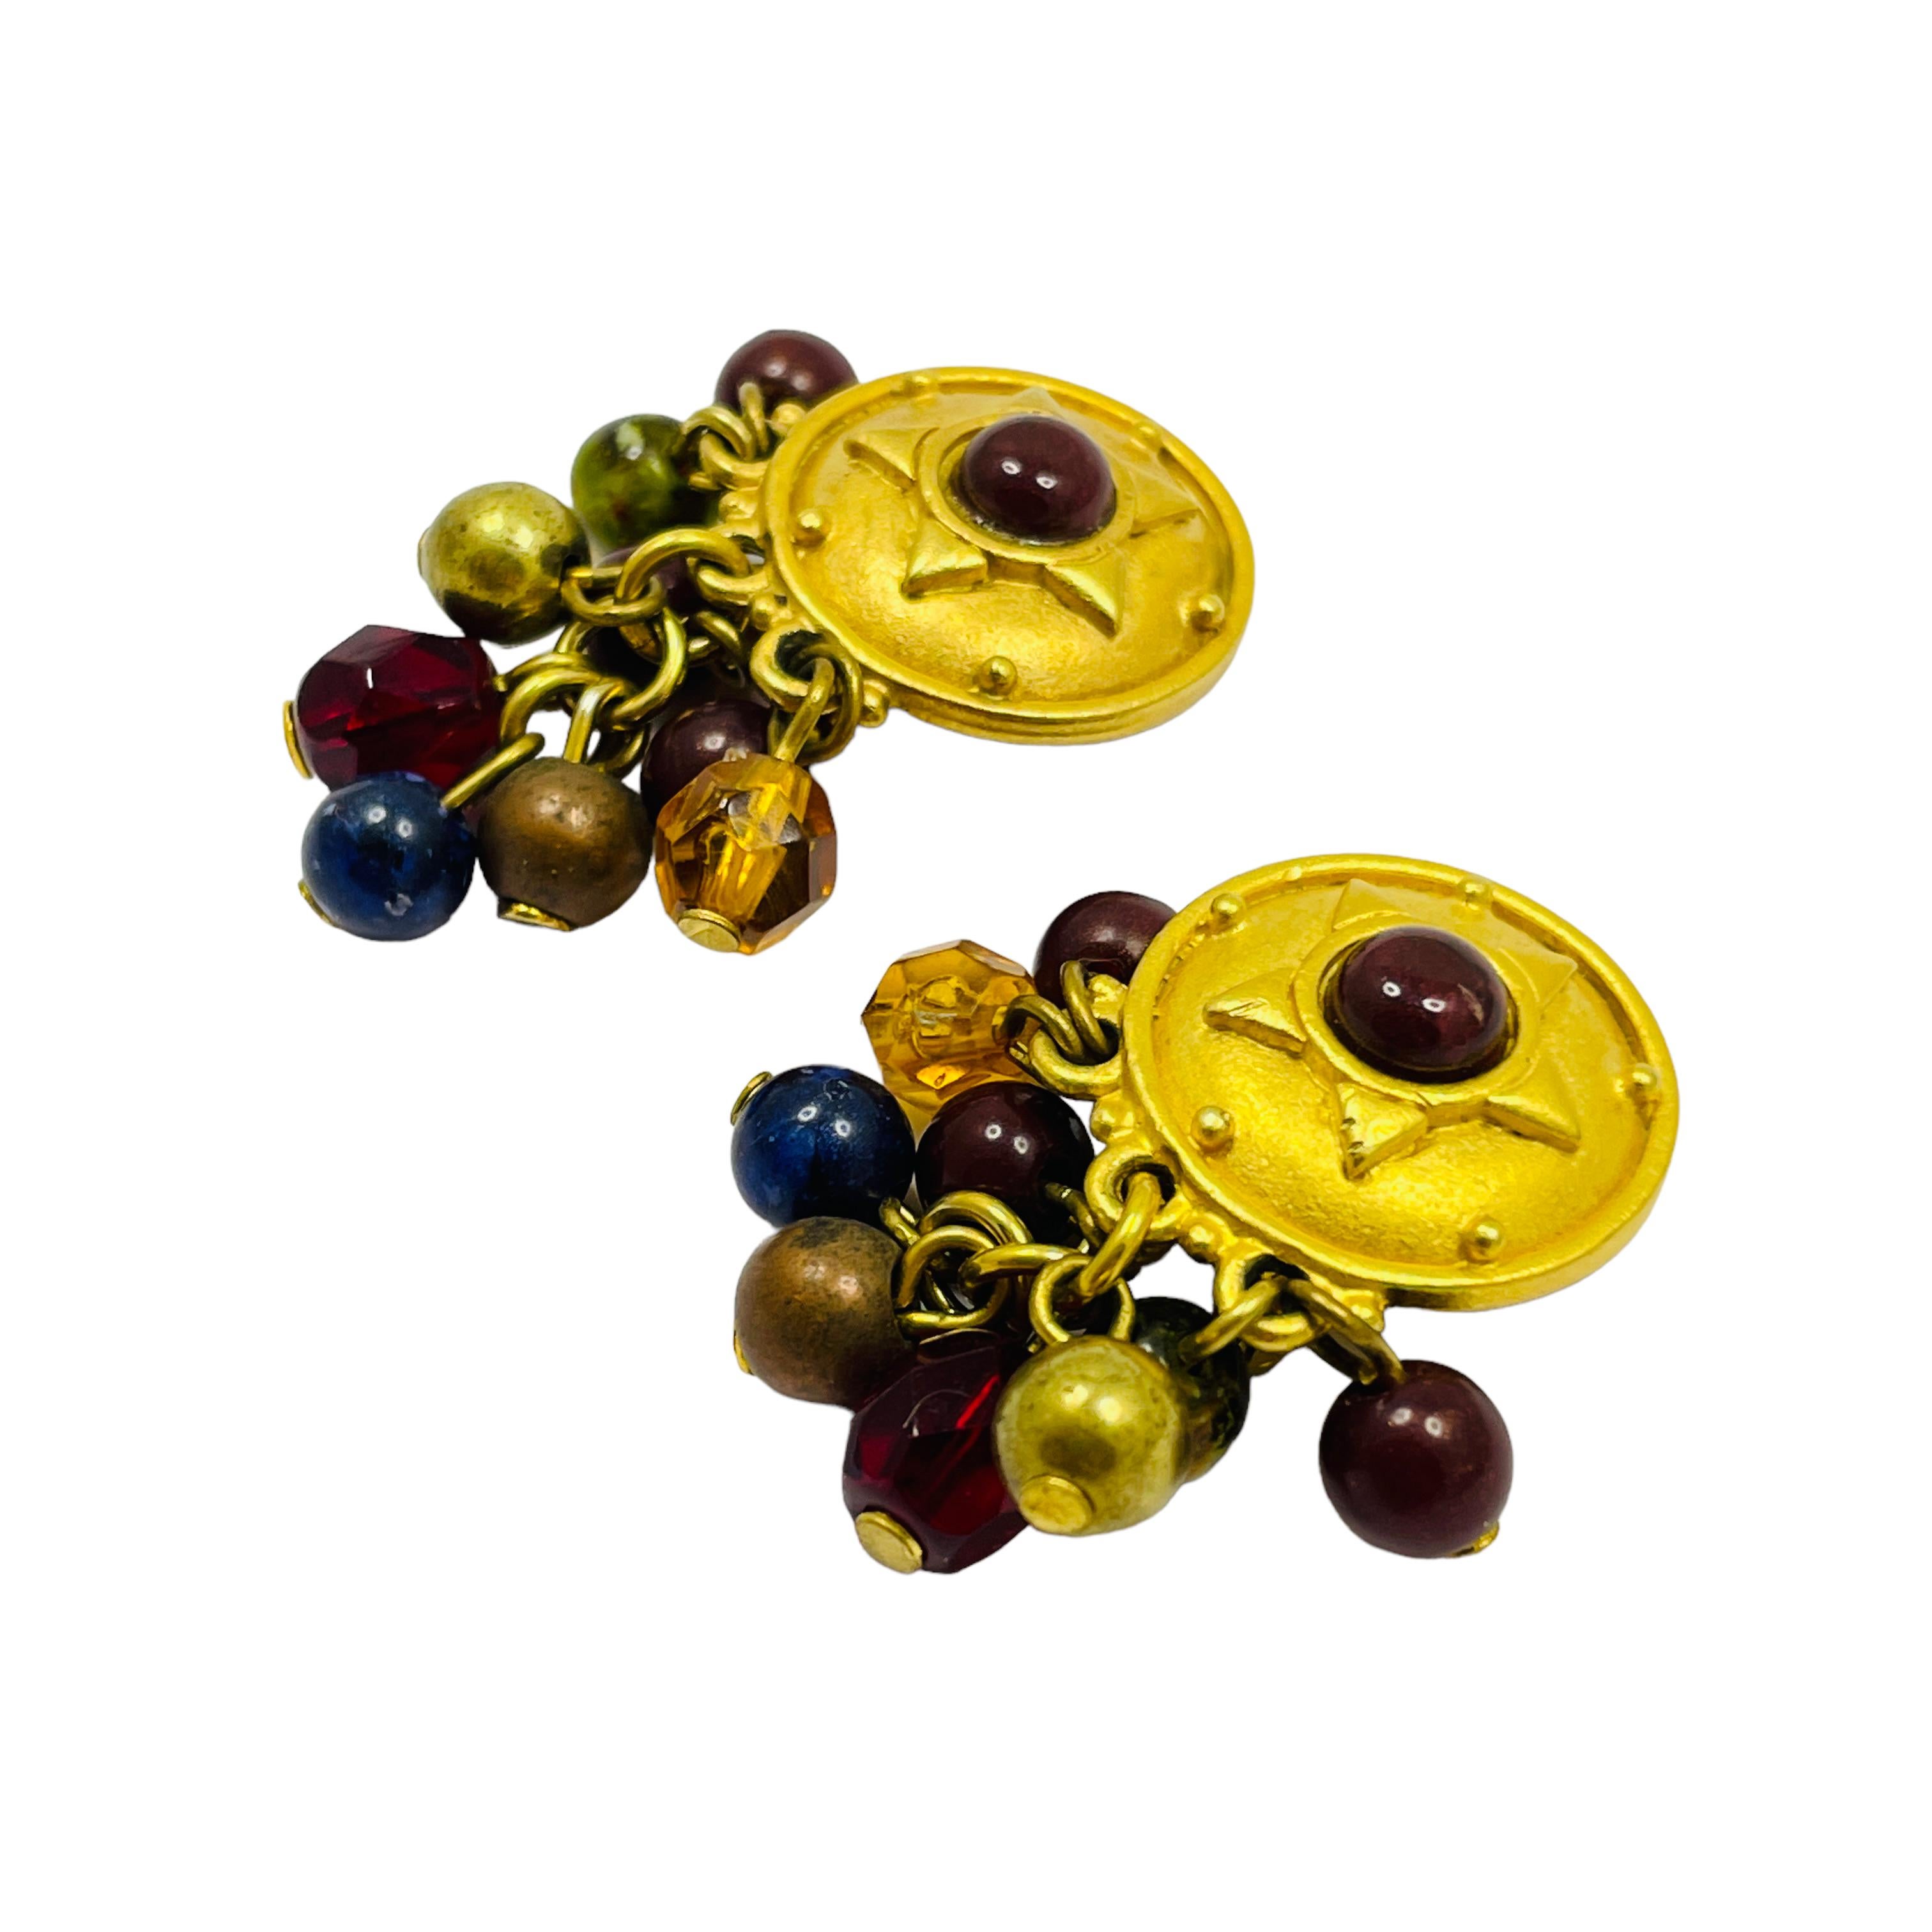 DETAILS

• signed LIZ CLAIBORNE

• gold tone with beads

• vintage designer pierced earrings

MEASUREMENTS

• 0.5